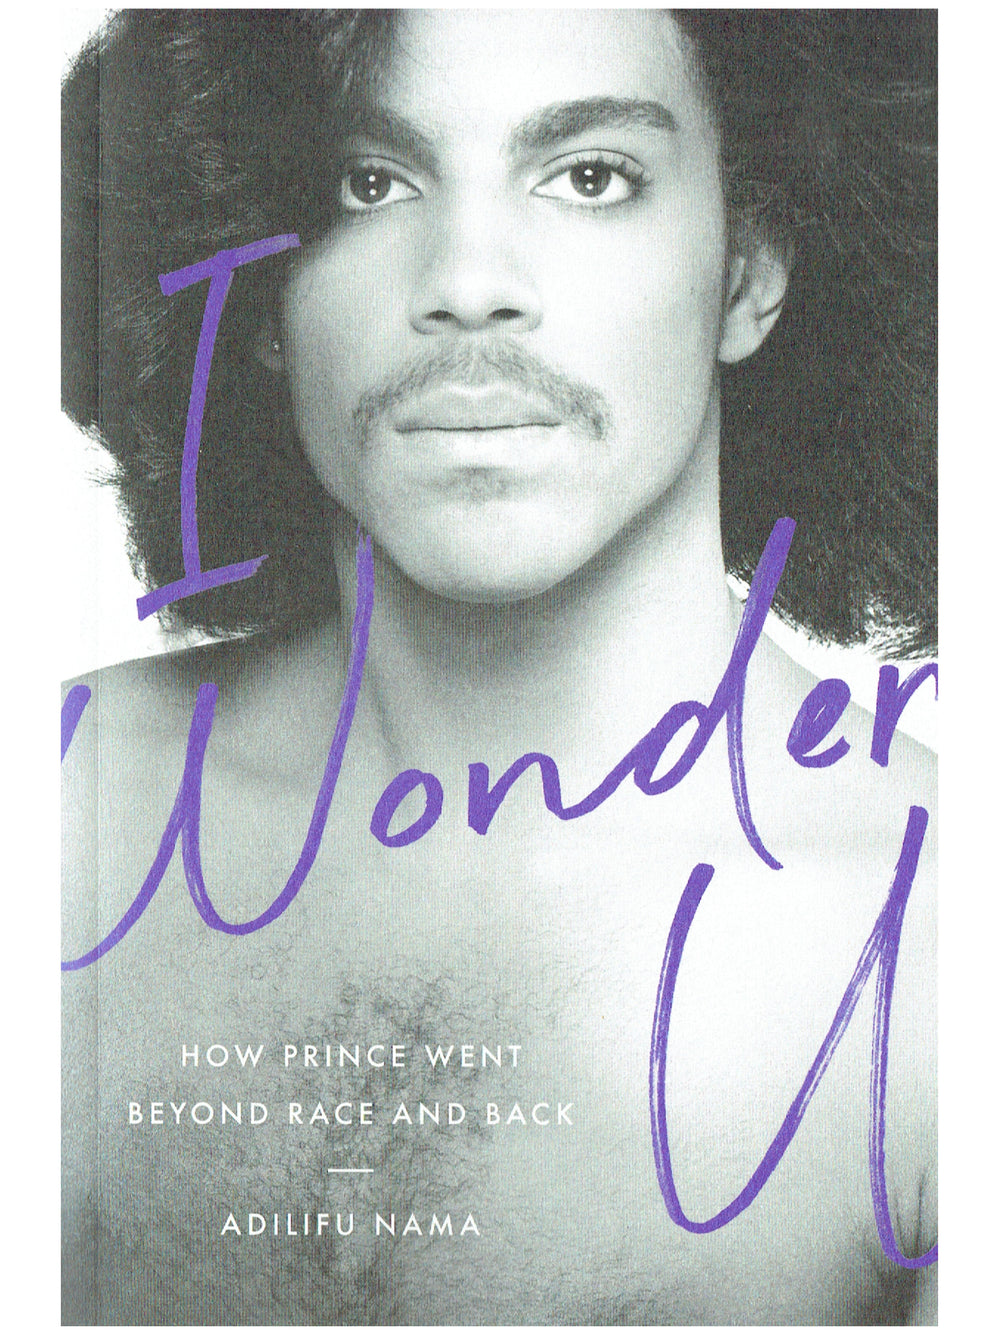 Prince – I Wonder U How Prince Went Beyond The Race And Back Softbacked Book NEW